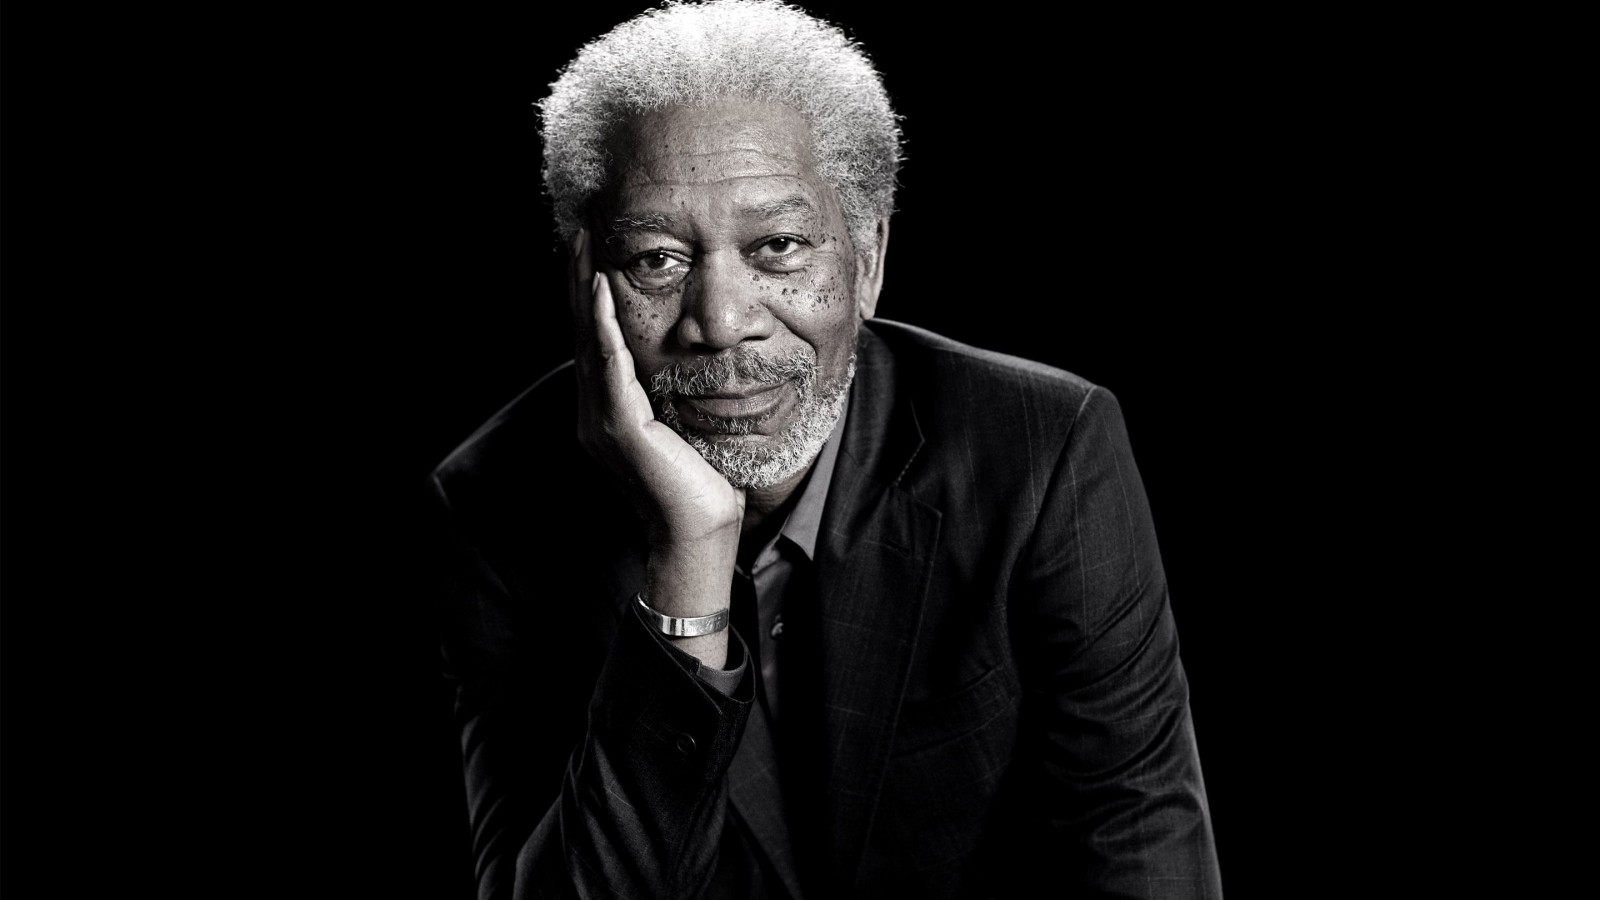 Morgan Freeman Portrait Wallpaper for Desktop 1600x900